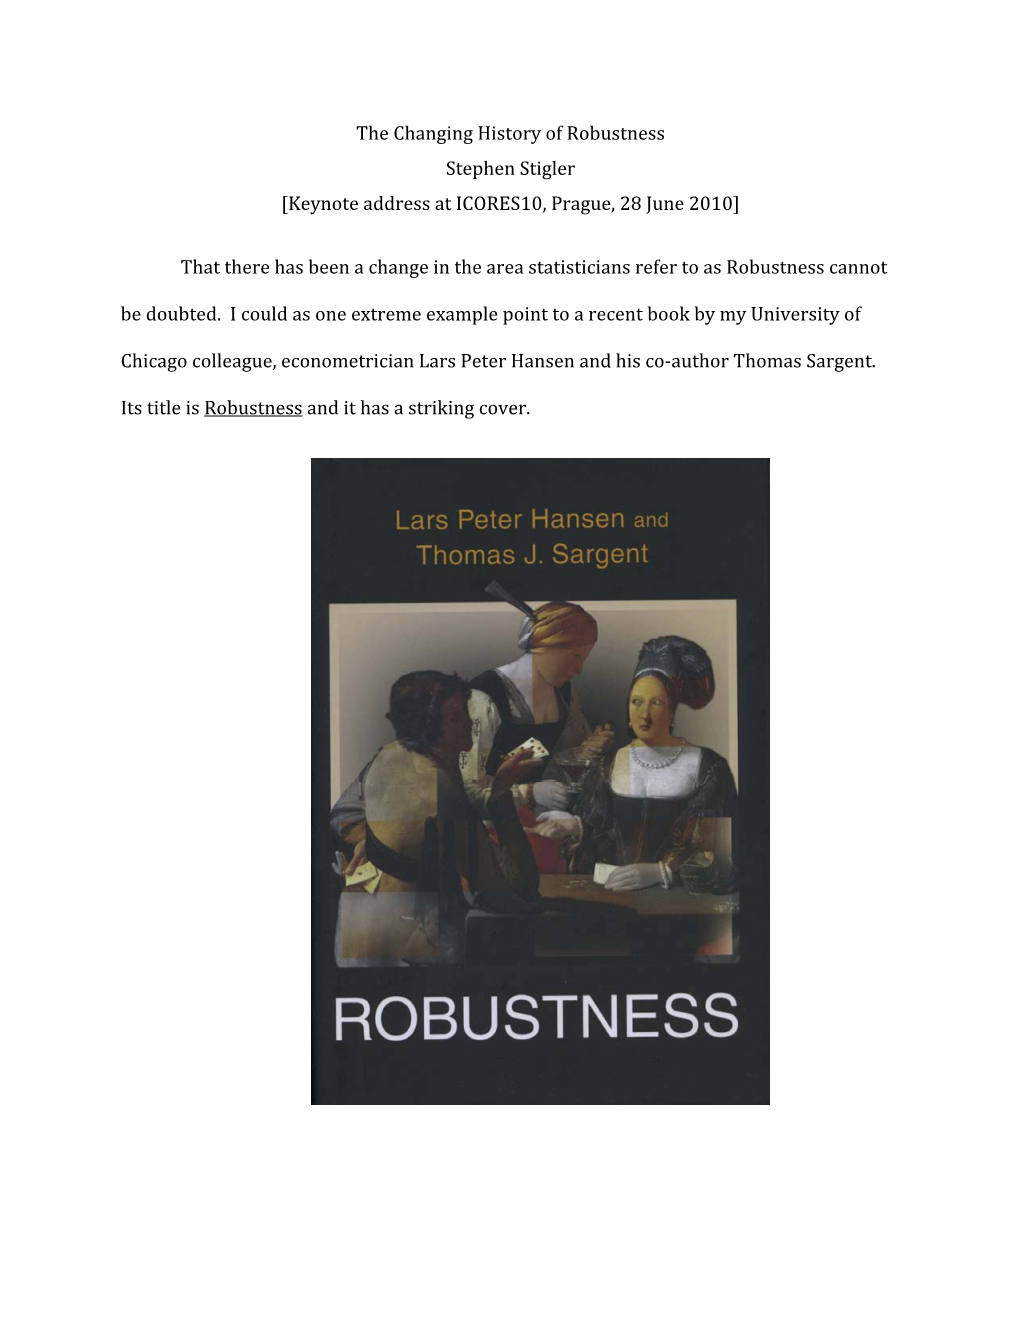 The Changing History of Robustness Stephen Stigler [Keynote Address at ICORES10, Prague, 28 June 2010]